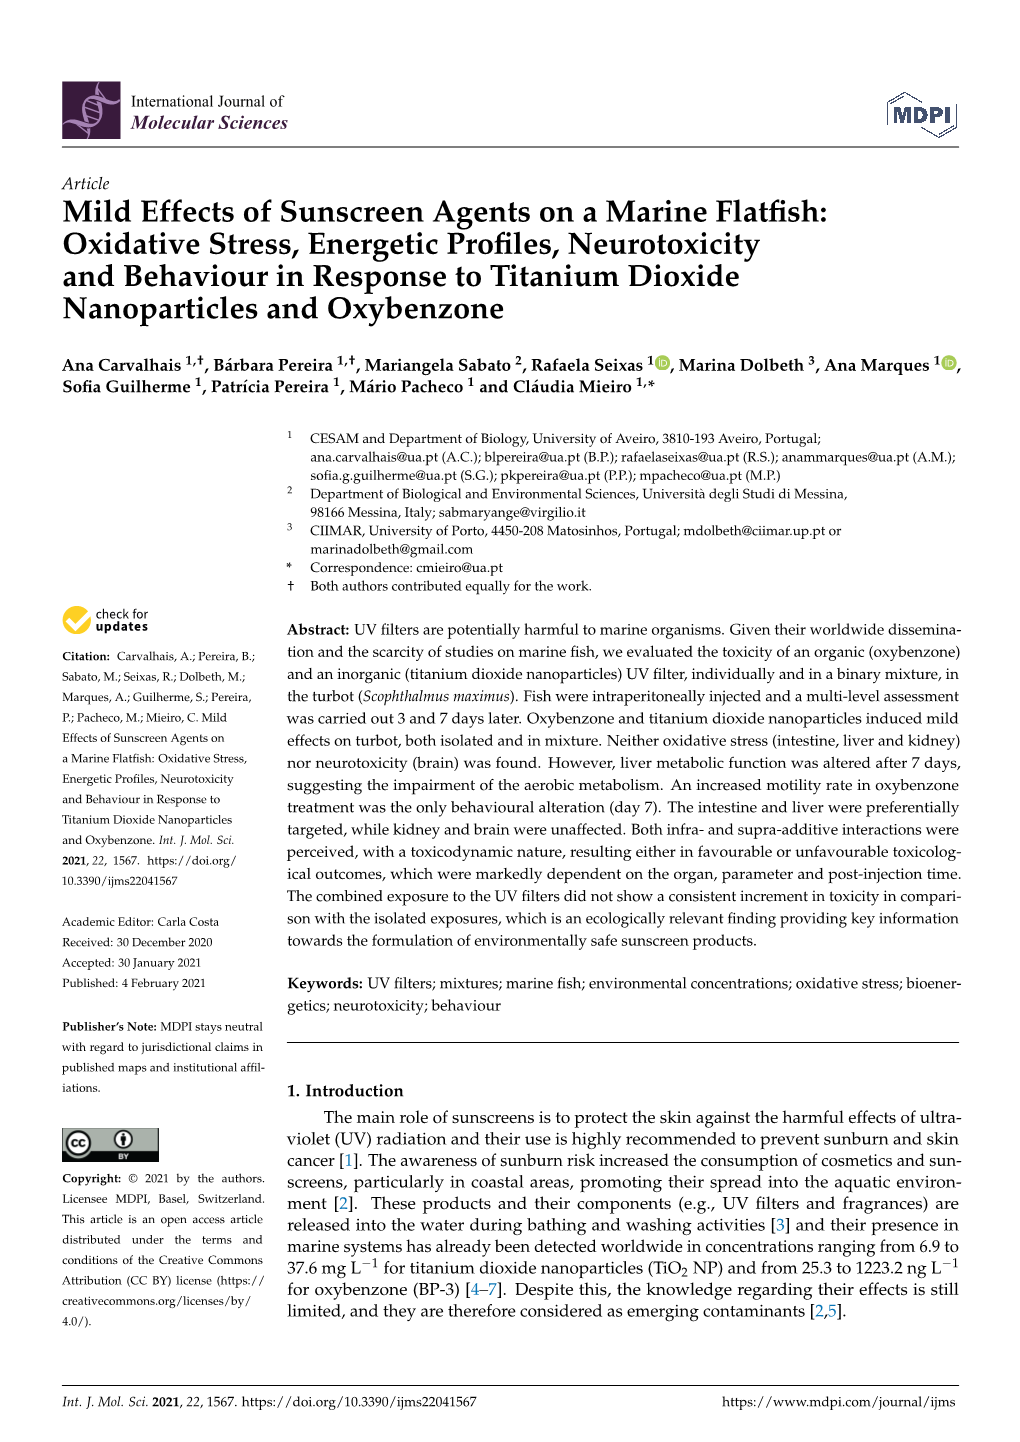 Mild Effects of Sunscreen Agents on a Marine Flatfish: Oxidative Stress